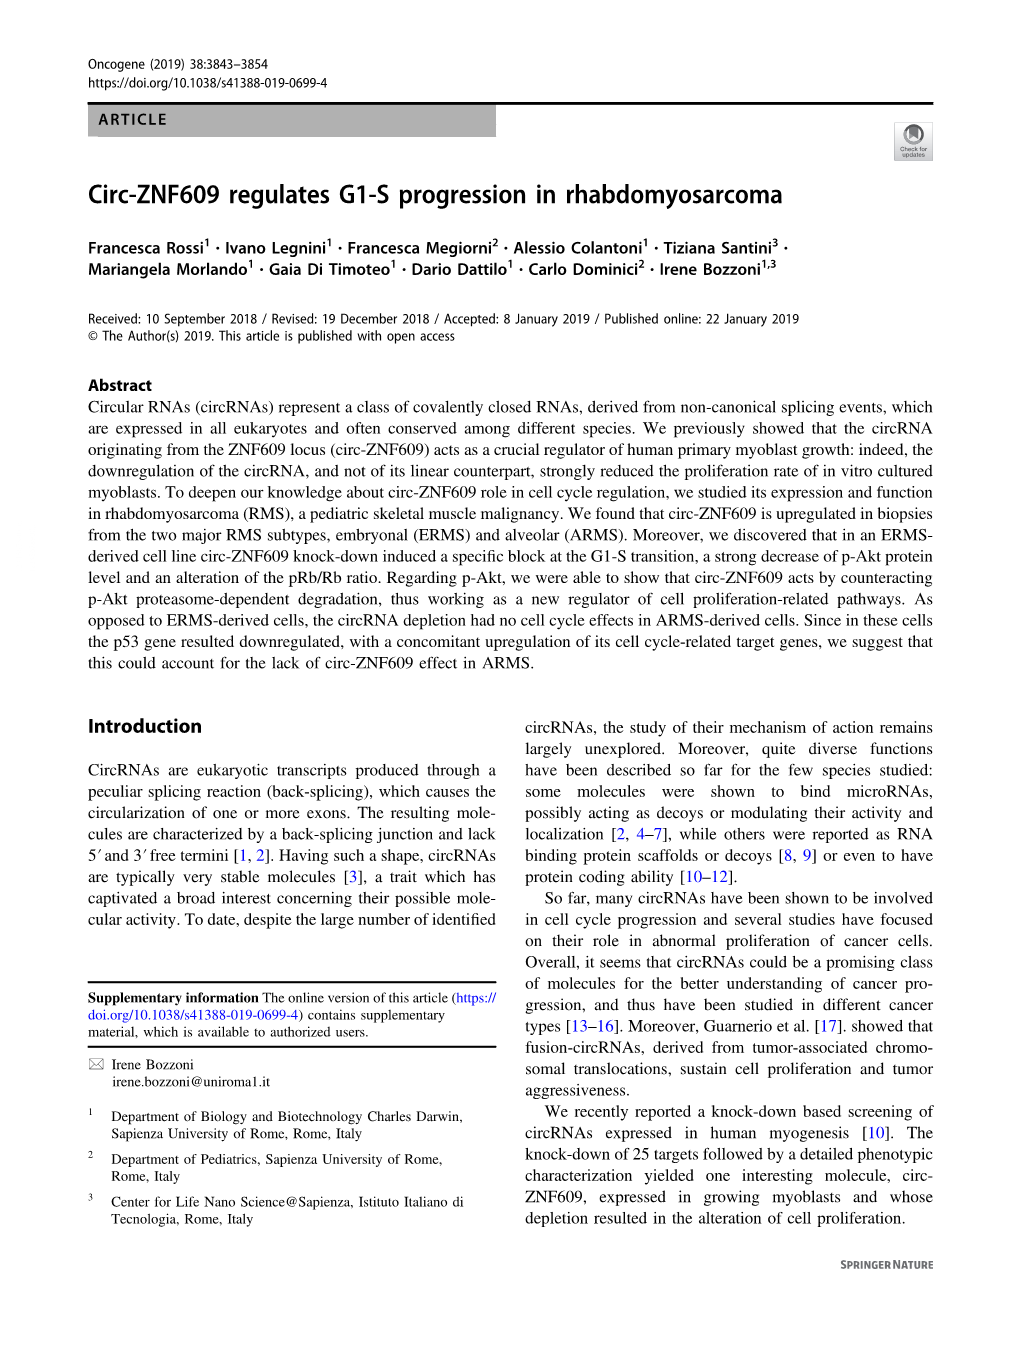 Circ-ZNF609 Regulates G1-S Progression in Rhabdomyosarcoma